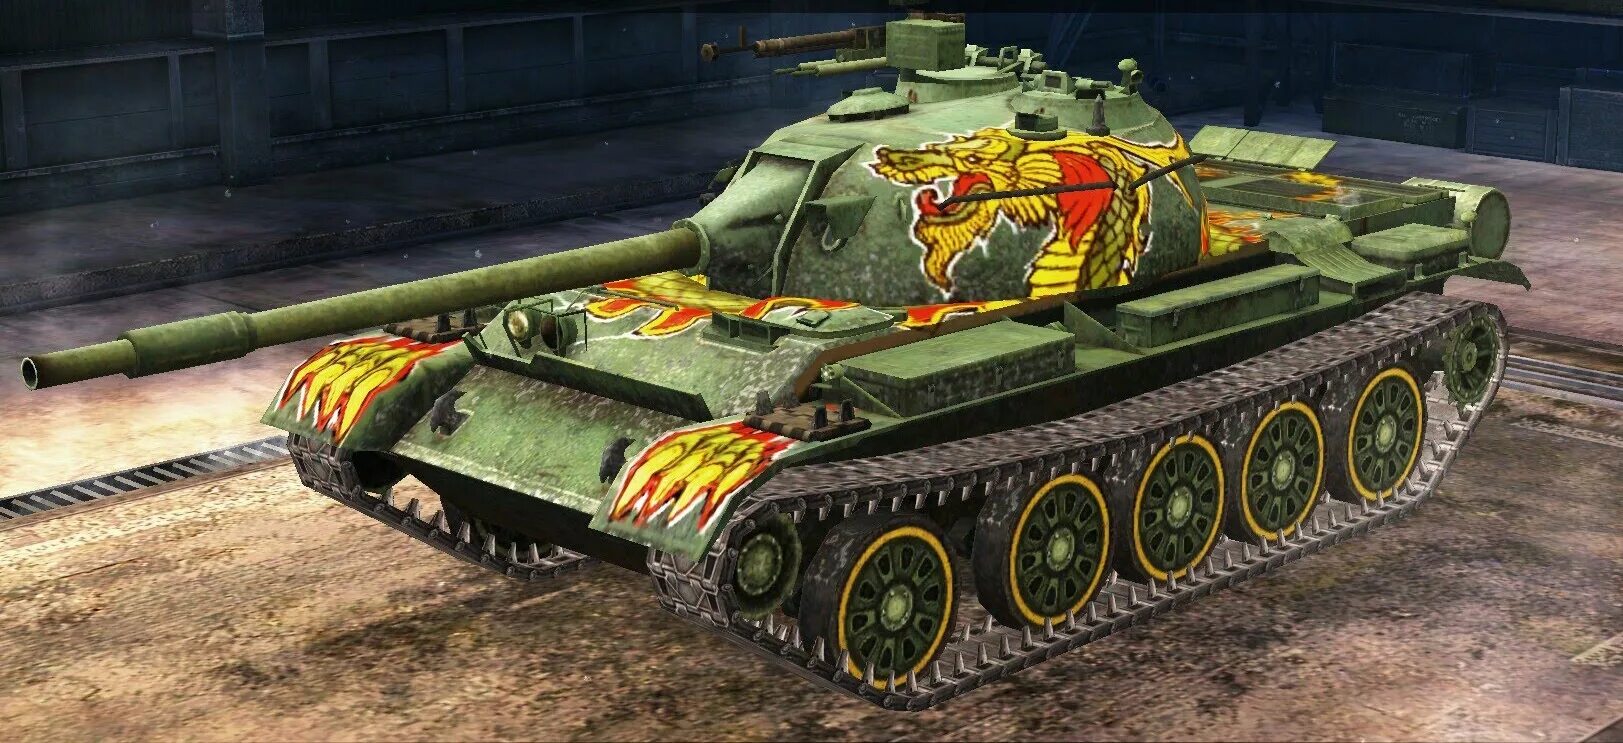 Wot blitz type. Type 62 Blitz. Тайп 62 World of Tanks. Type 62 танк. Type 62 в World of Tanks Blitz.